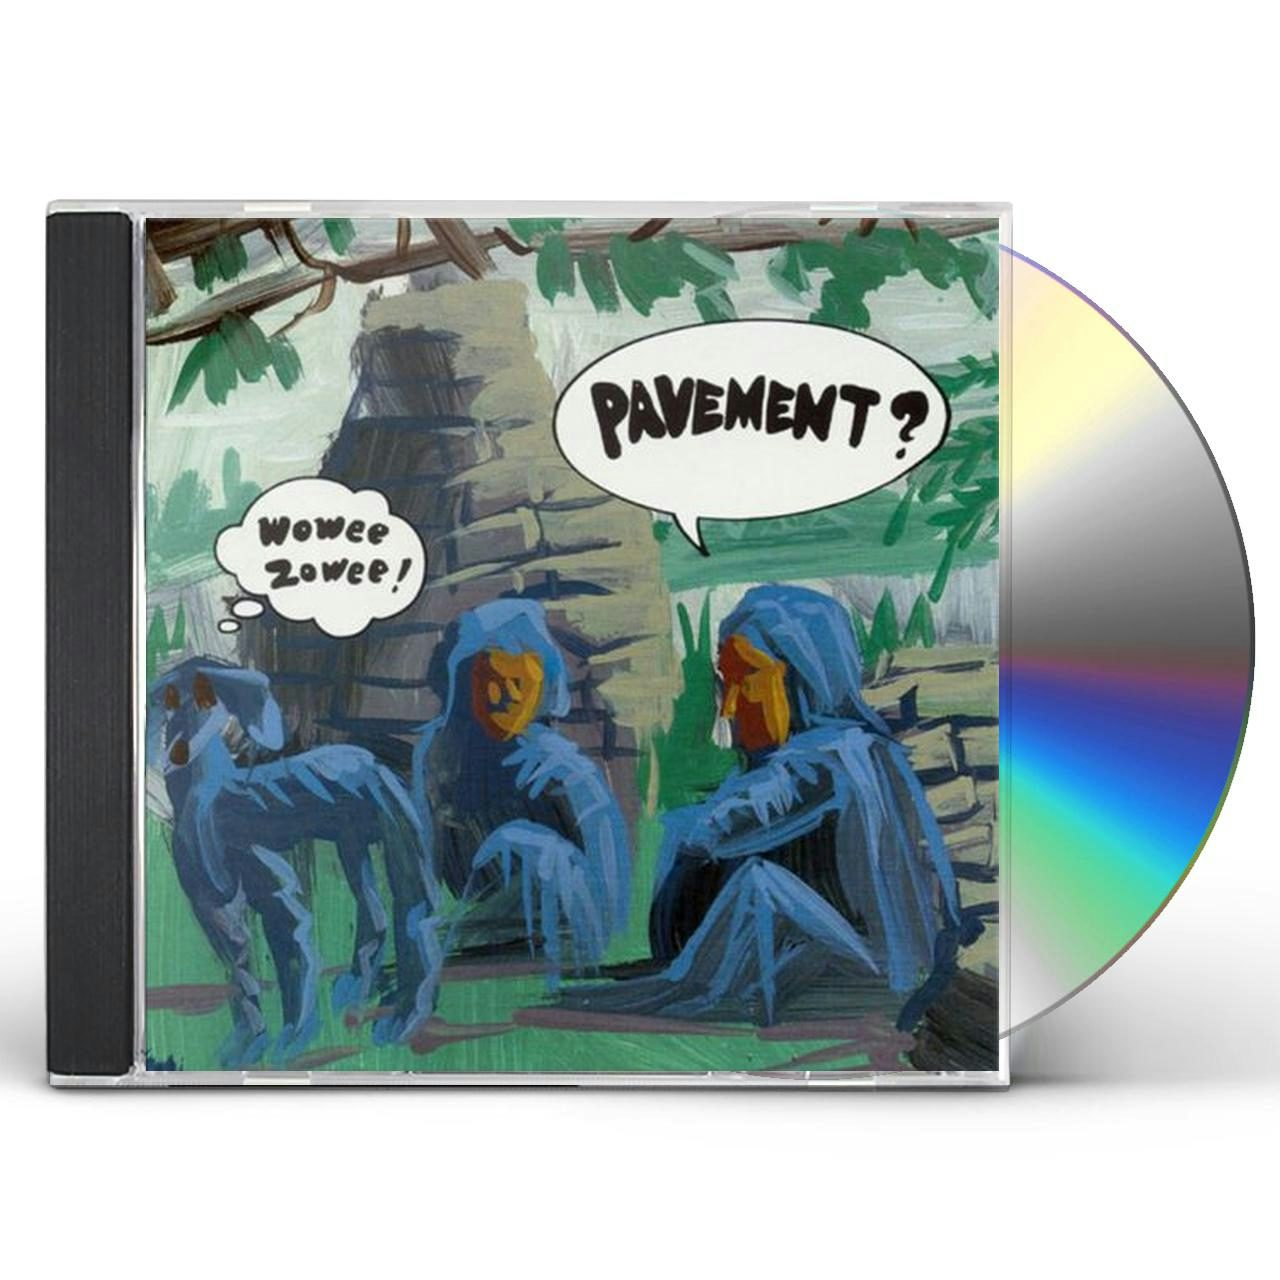 wowee zowee cd - Pavement